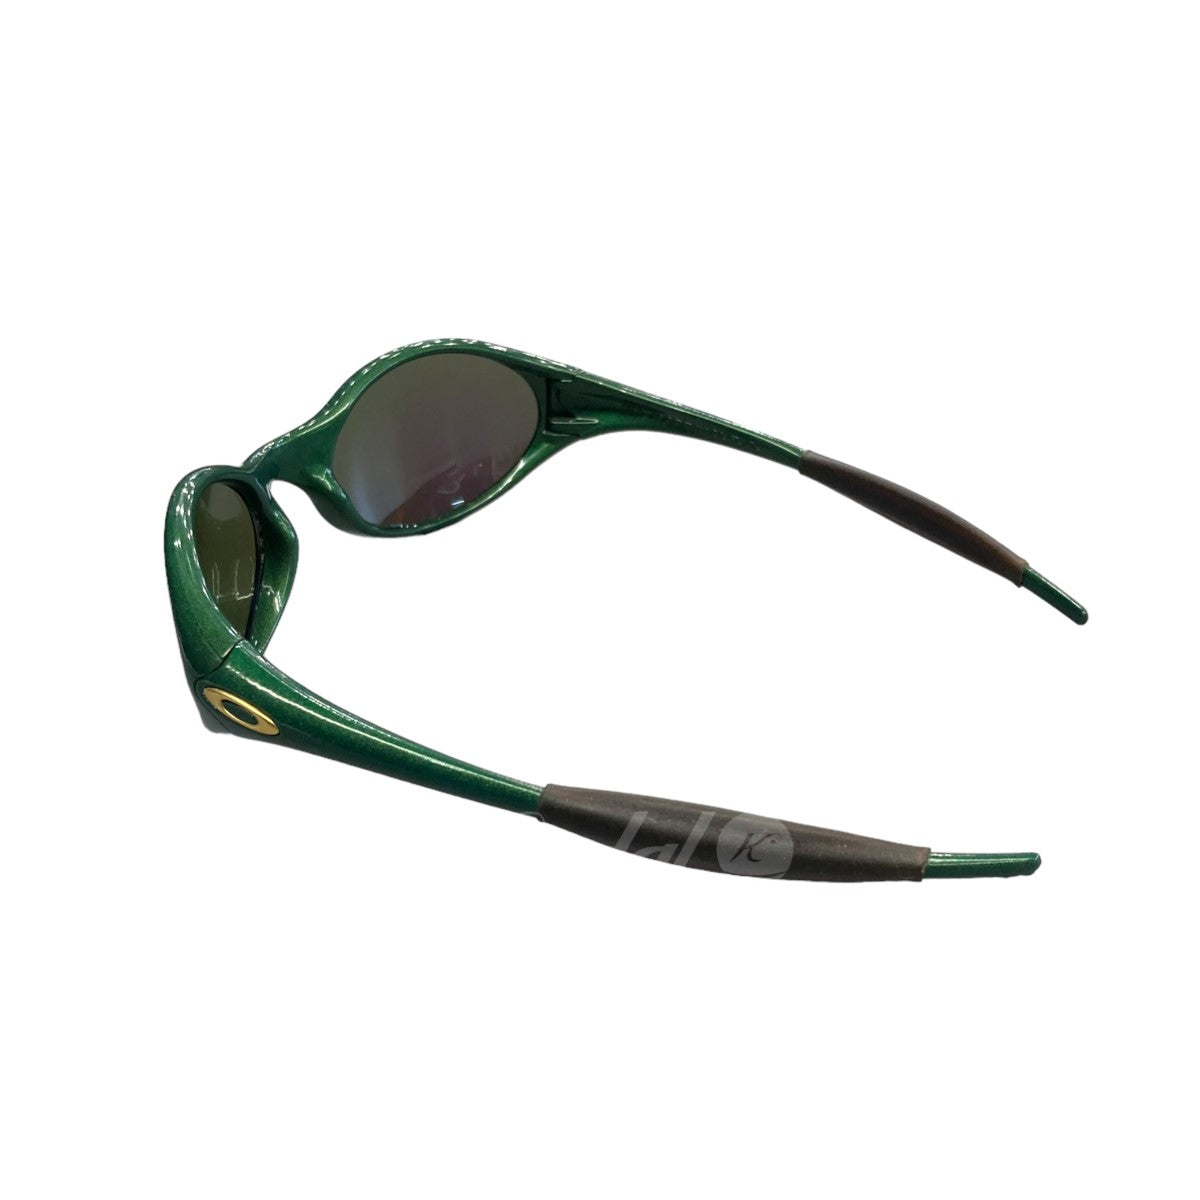 OAKLEY(オークリー) オーバル型 偏光レンズサングラス グリーン サイズ 